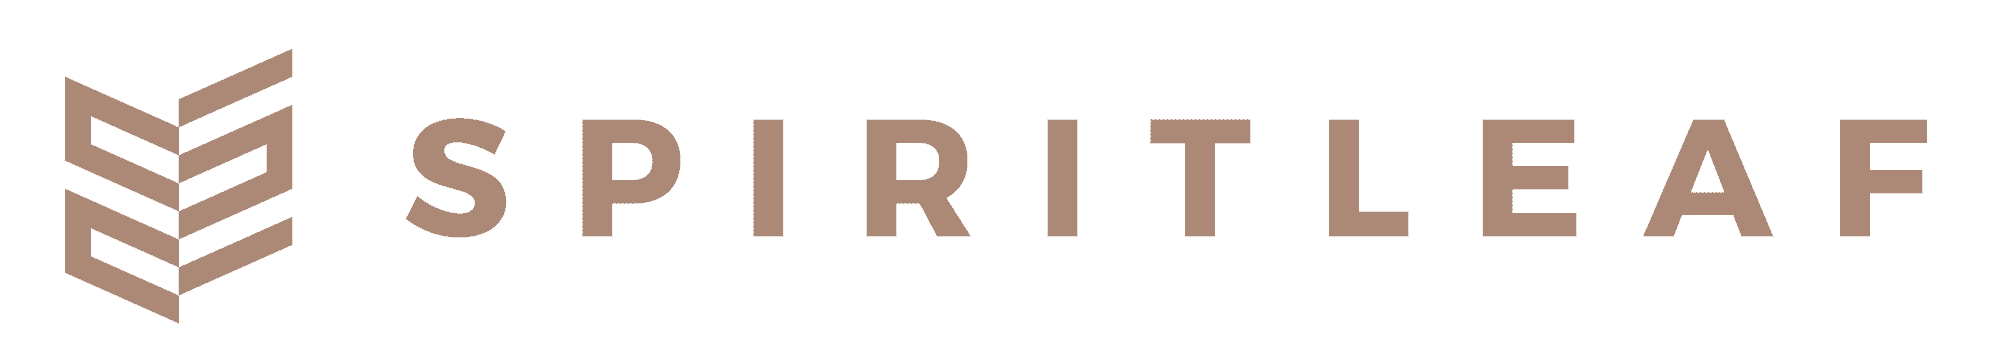 Spiritleaf Logo transparent